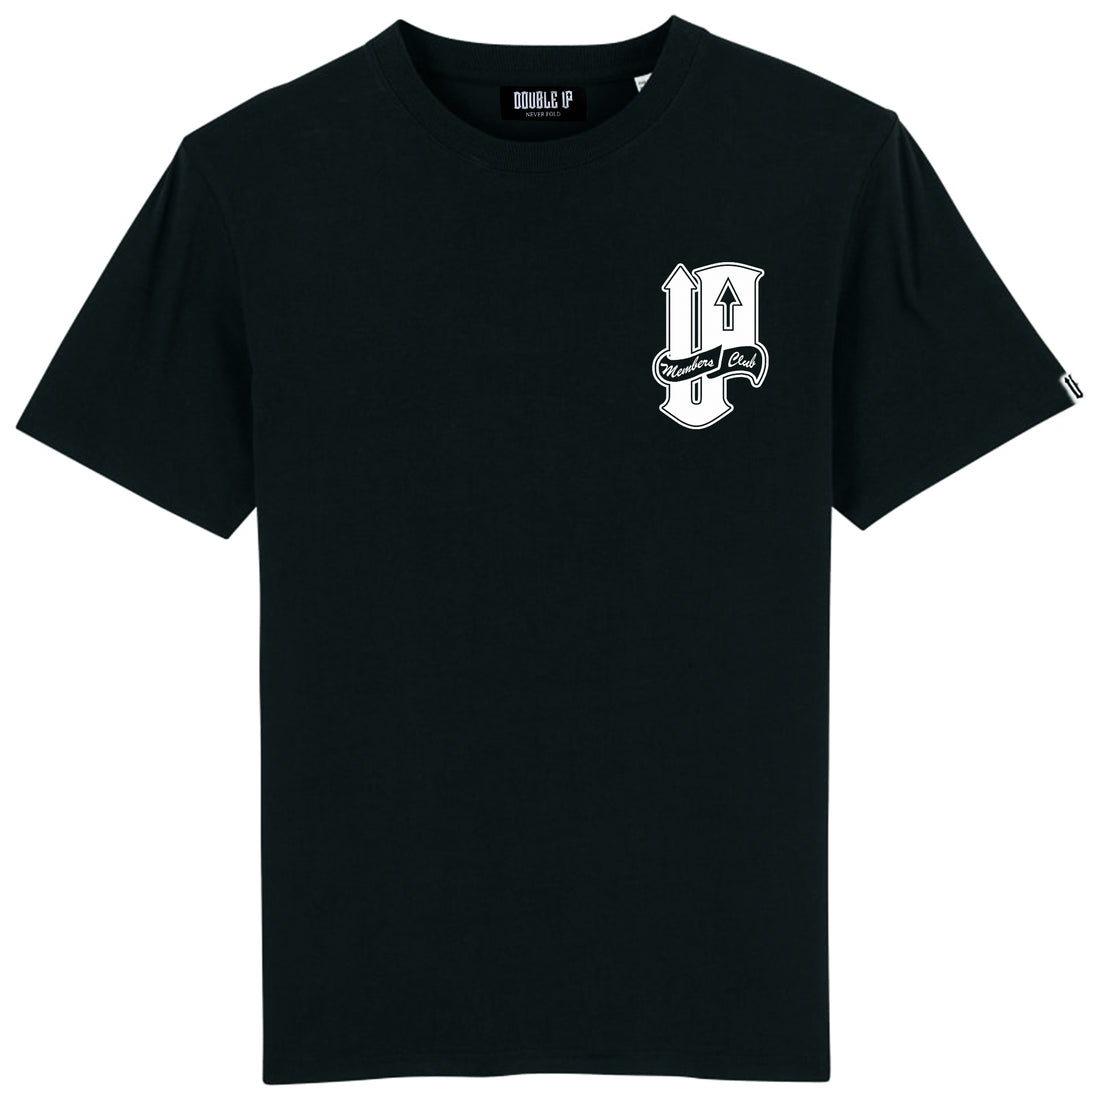 Members Club Black Tshirt Front with doubleup Logo